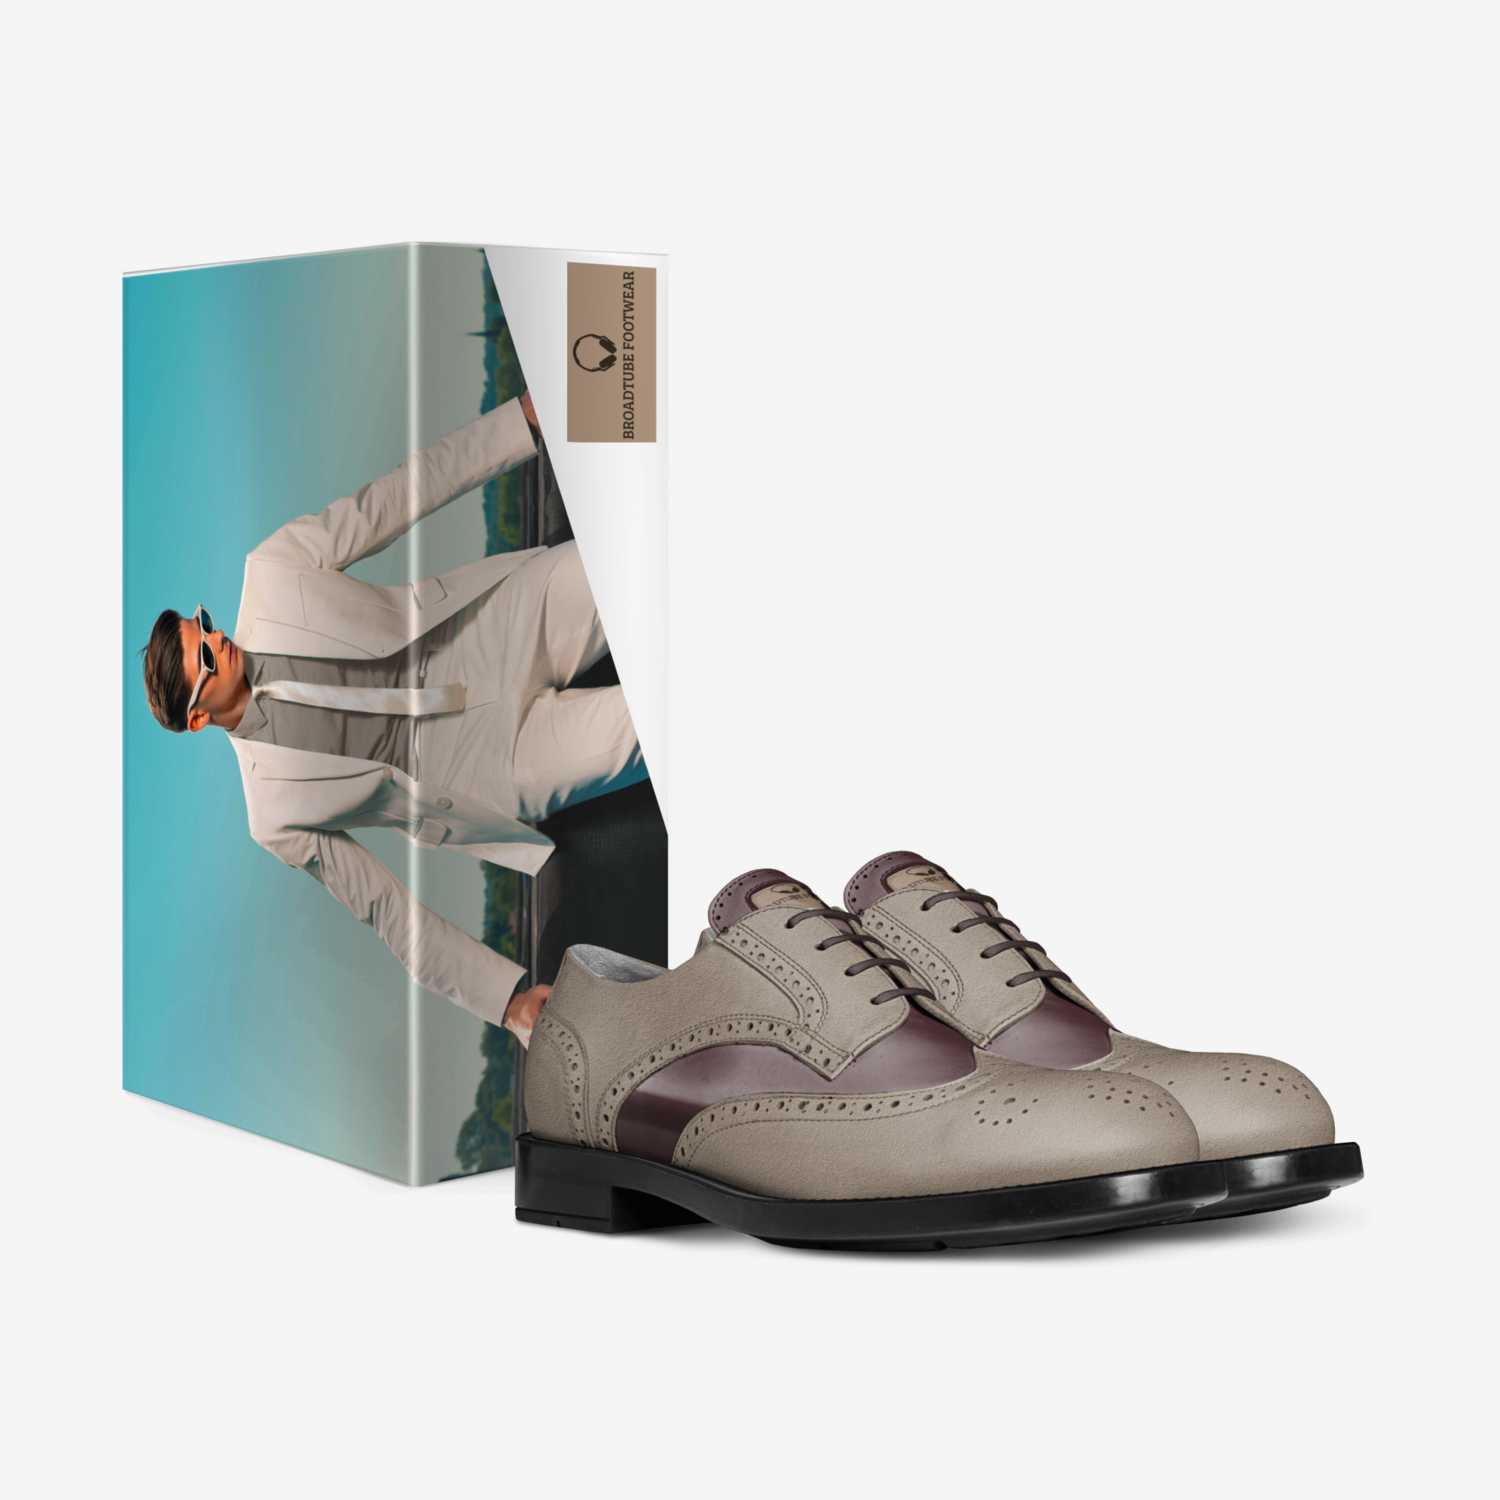 Broadtube Footwear custom made in Italy shoes by Olamide Kolade | Box view